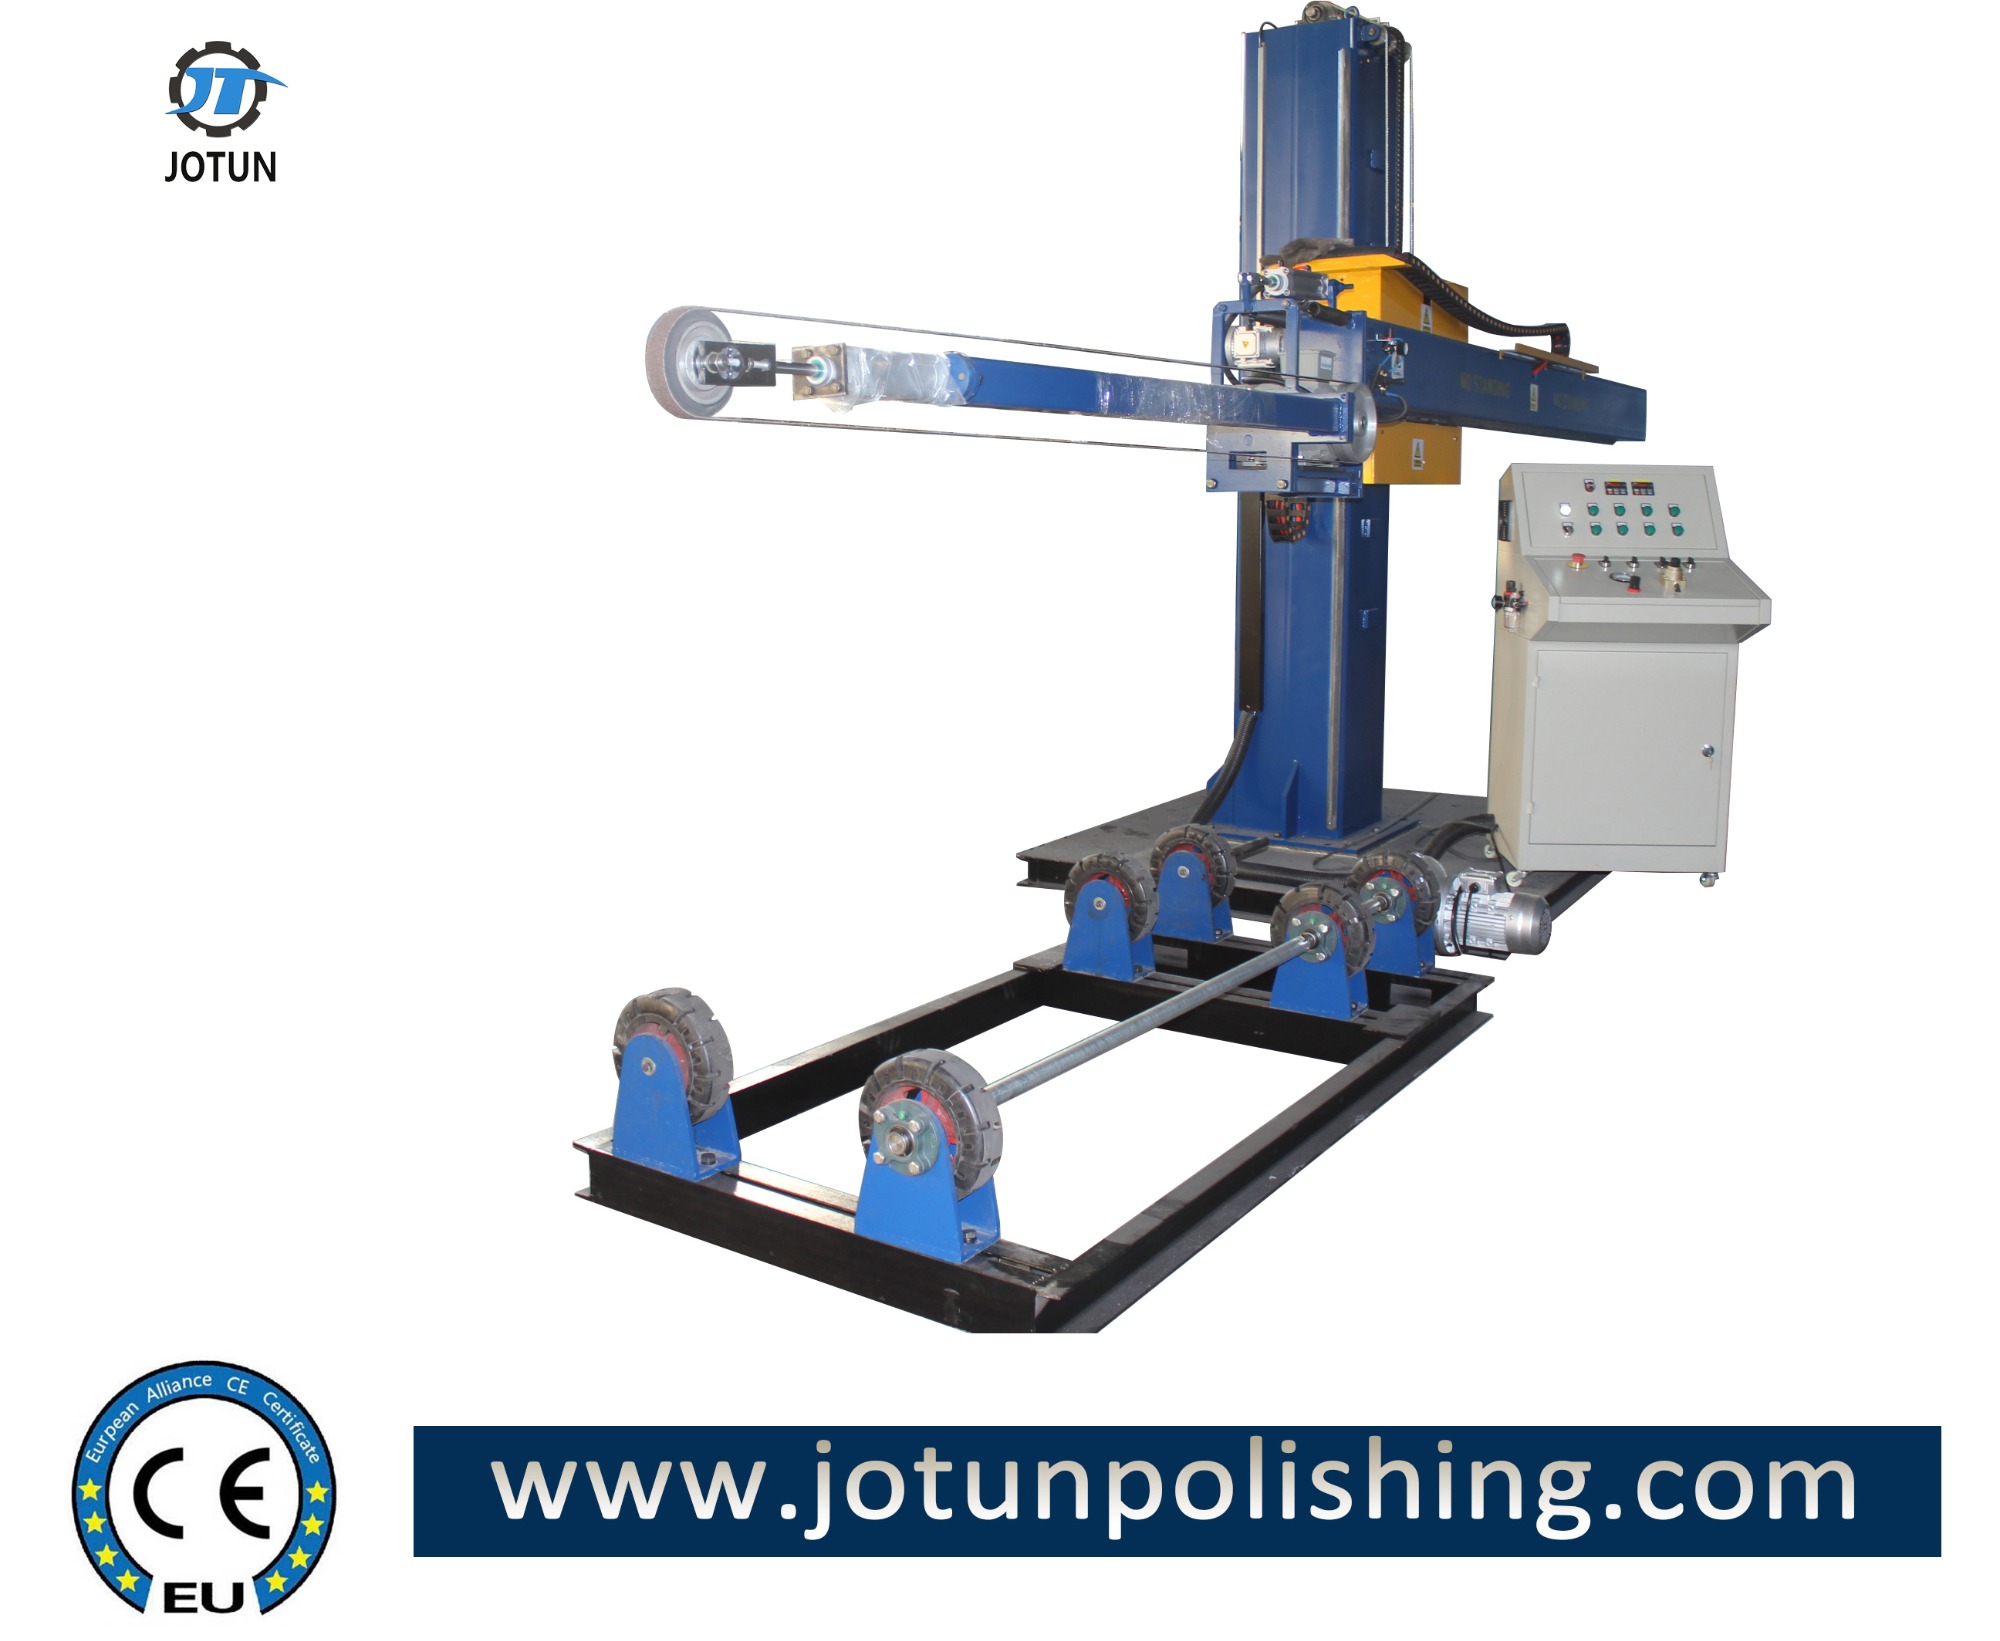 What is a rotary polishing machine?